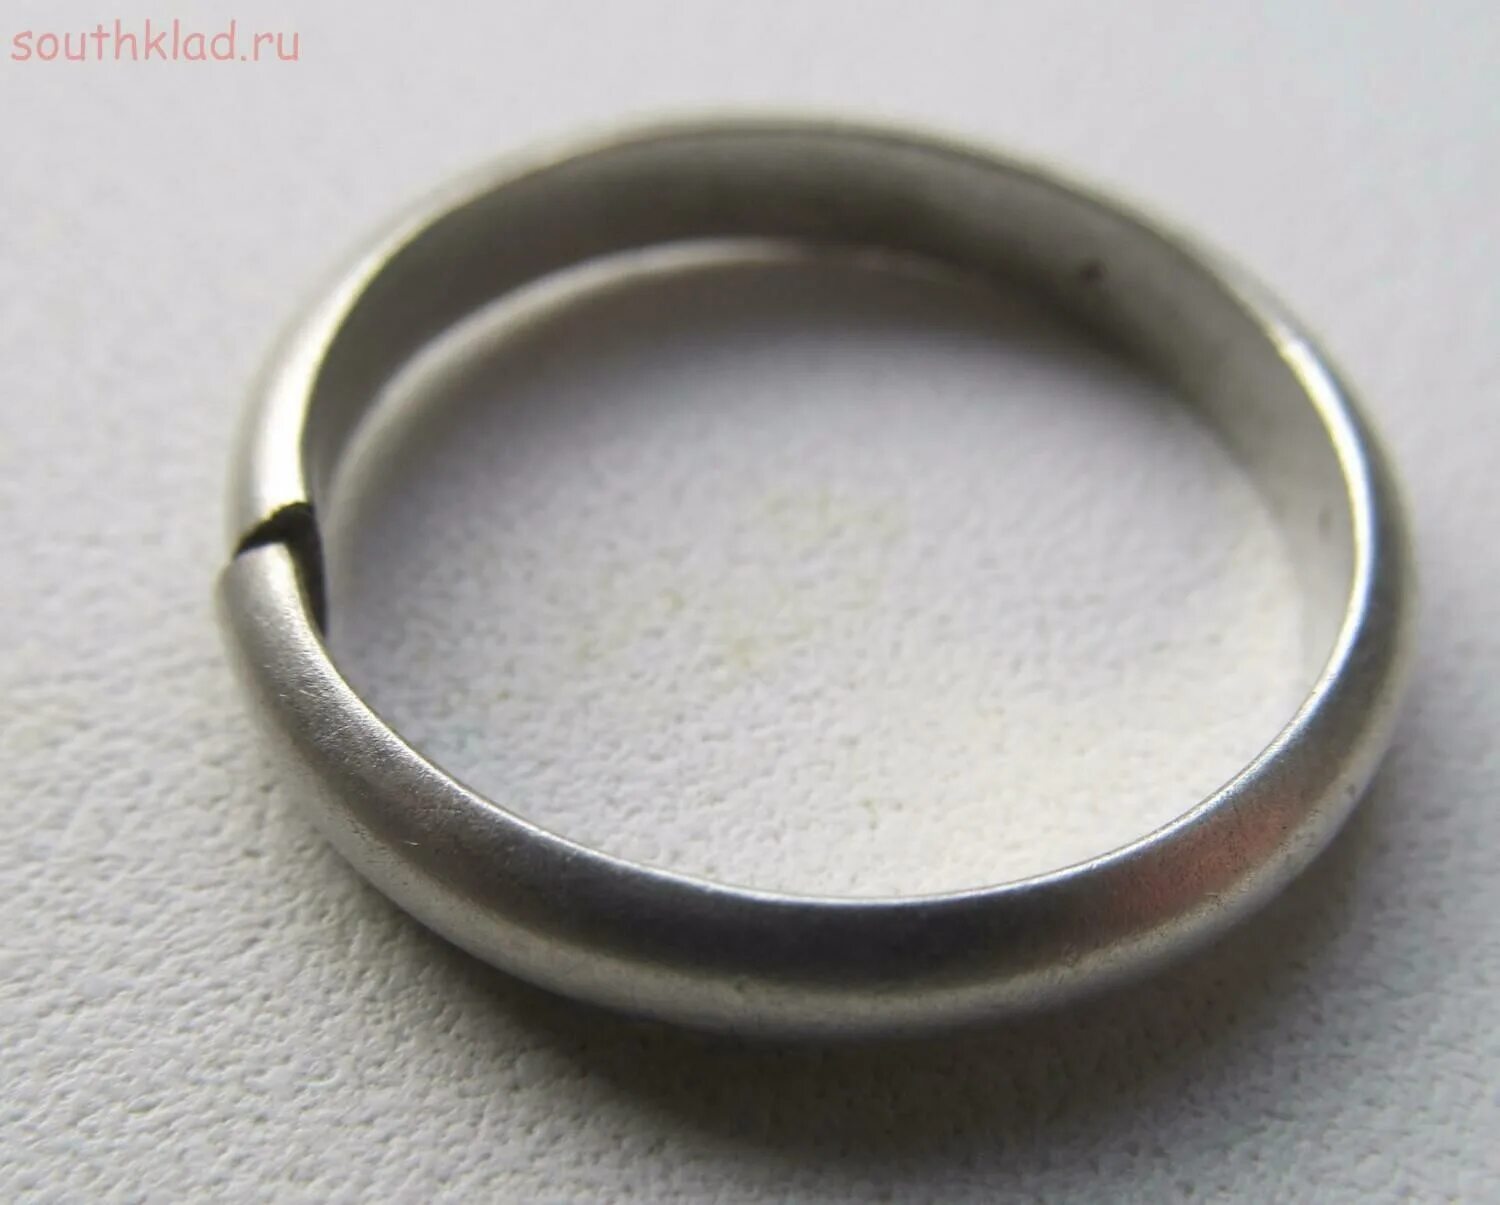 Сломанное серебряное кольцо. Лопнуло кольцо. Поломанное кольцо. Починить серебряное кольцо.